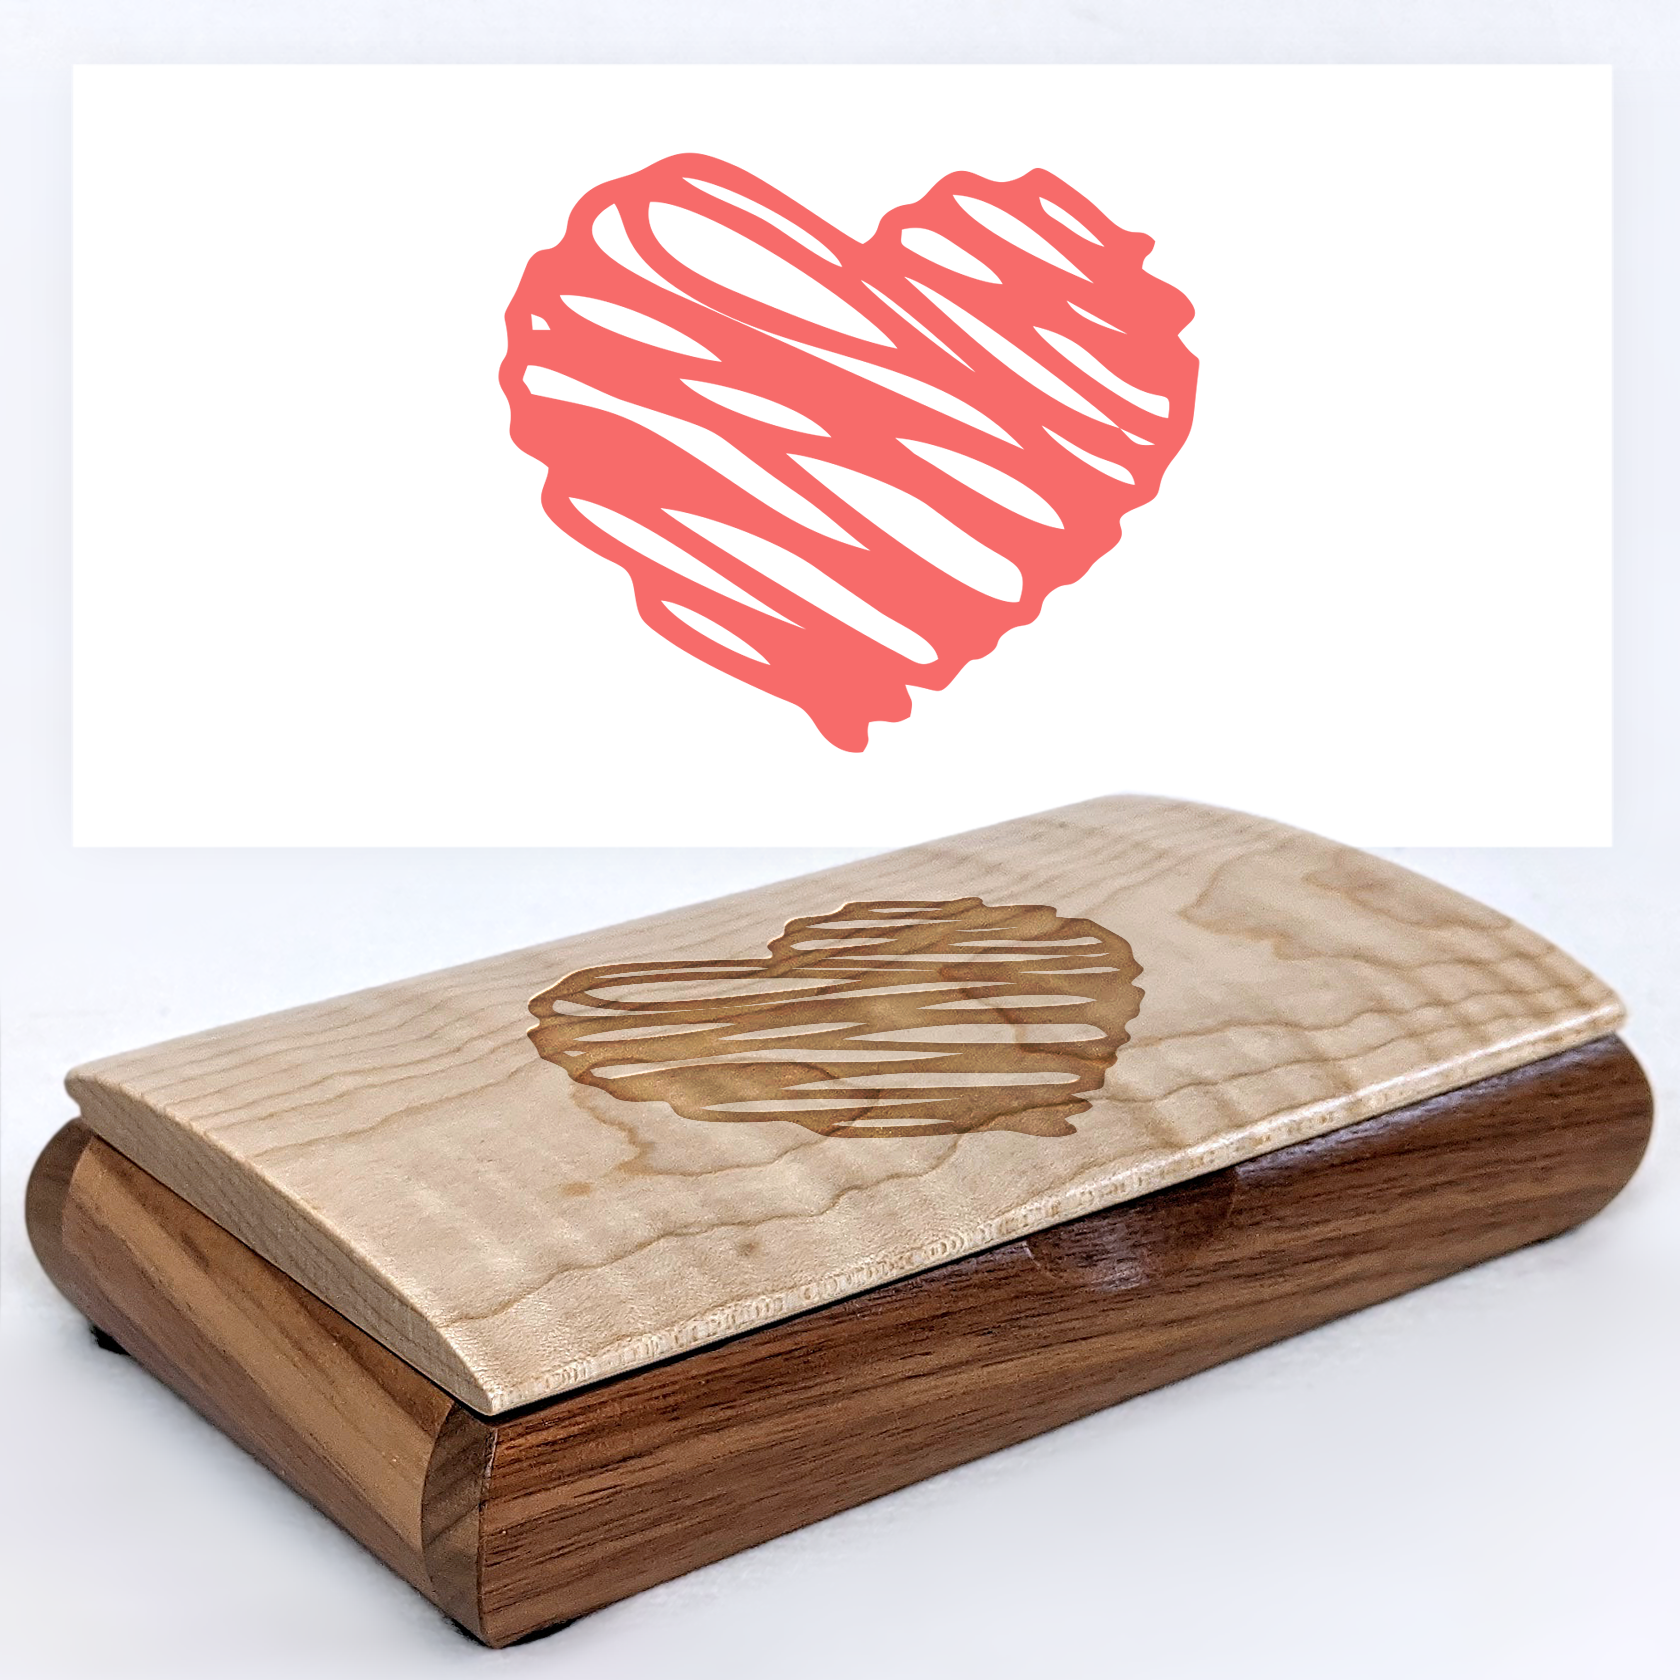 5 Ways to DIY a Wooden Tray - Sarah Hearts